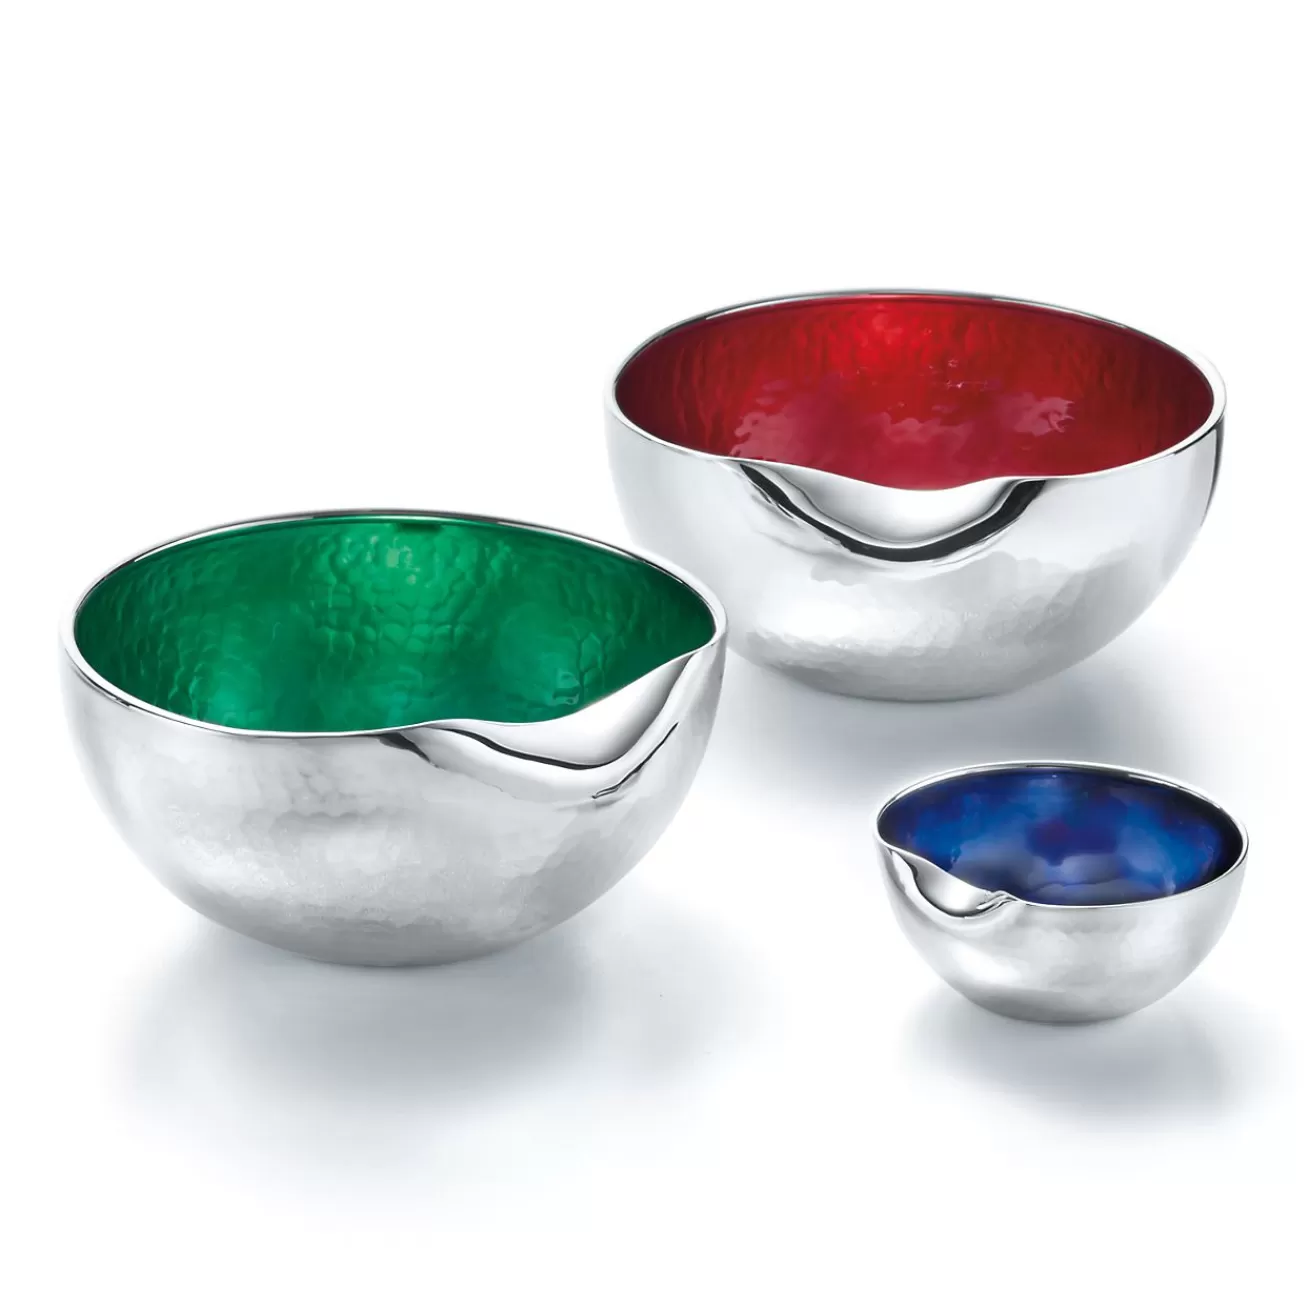 Tiffany & Co. Elsa Peretti® Thumbprint bowl in sterling silver with green enamel finish. | ^ Elsa Peretti® | The Home